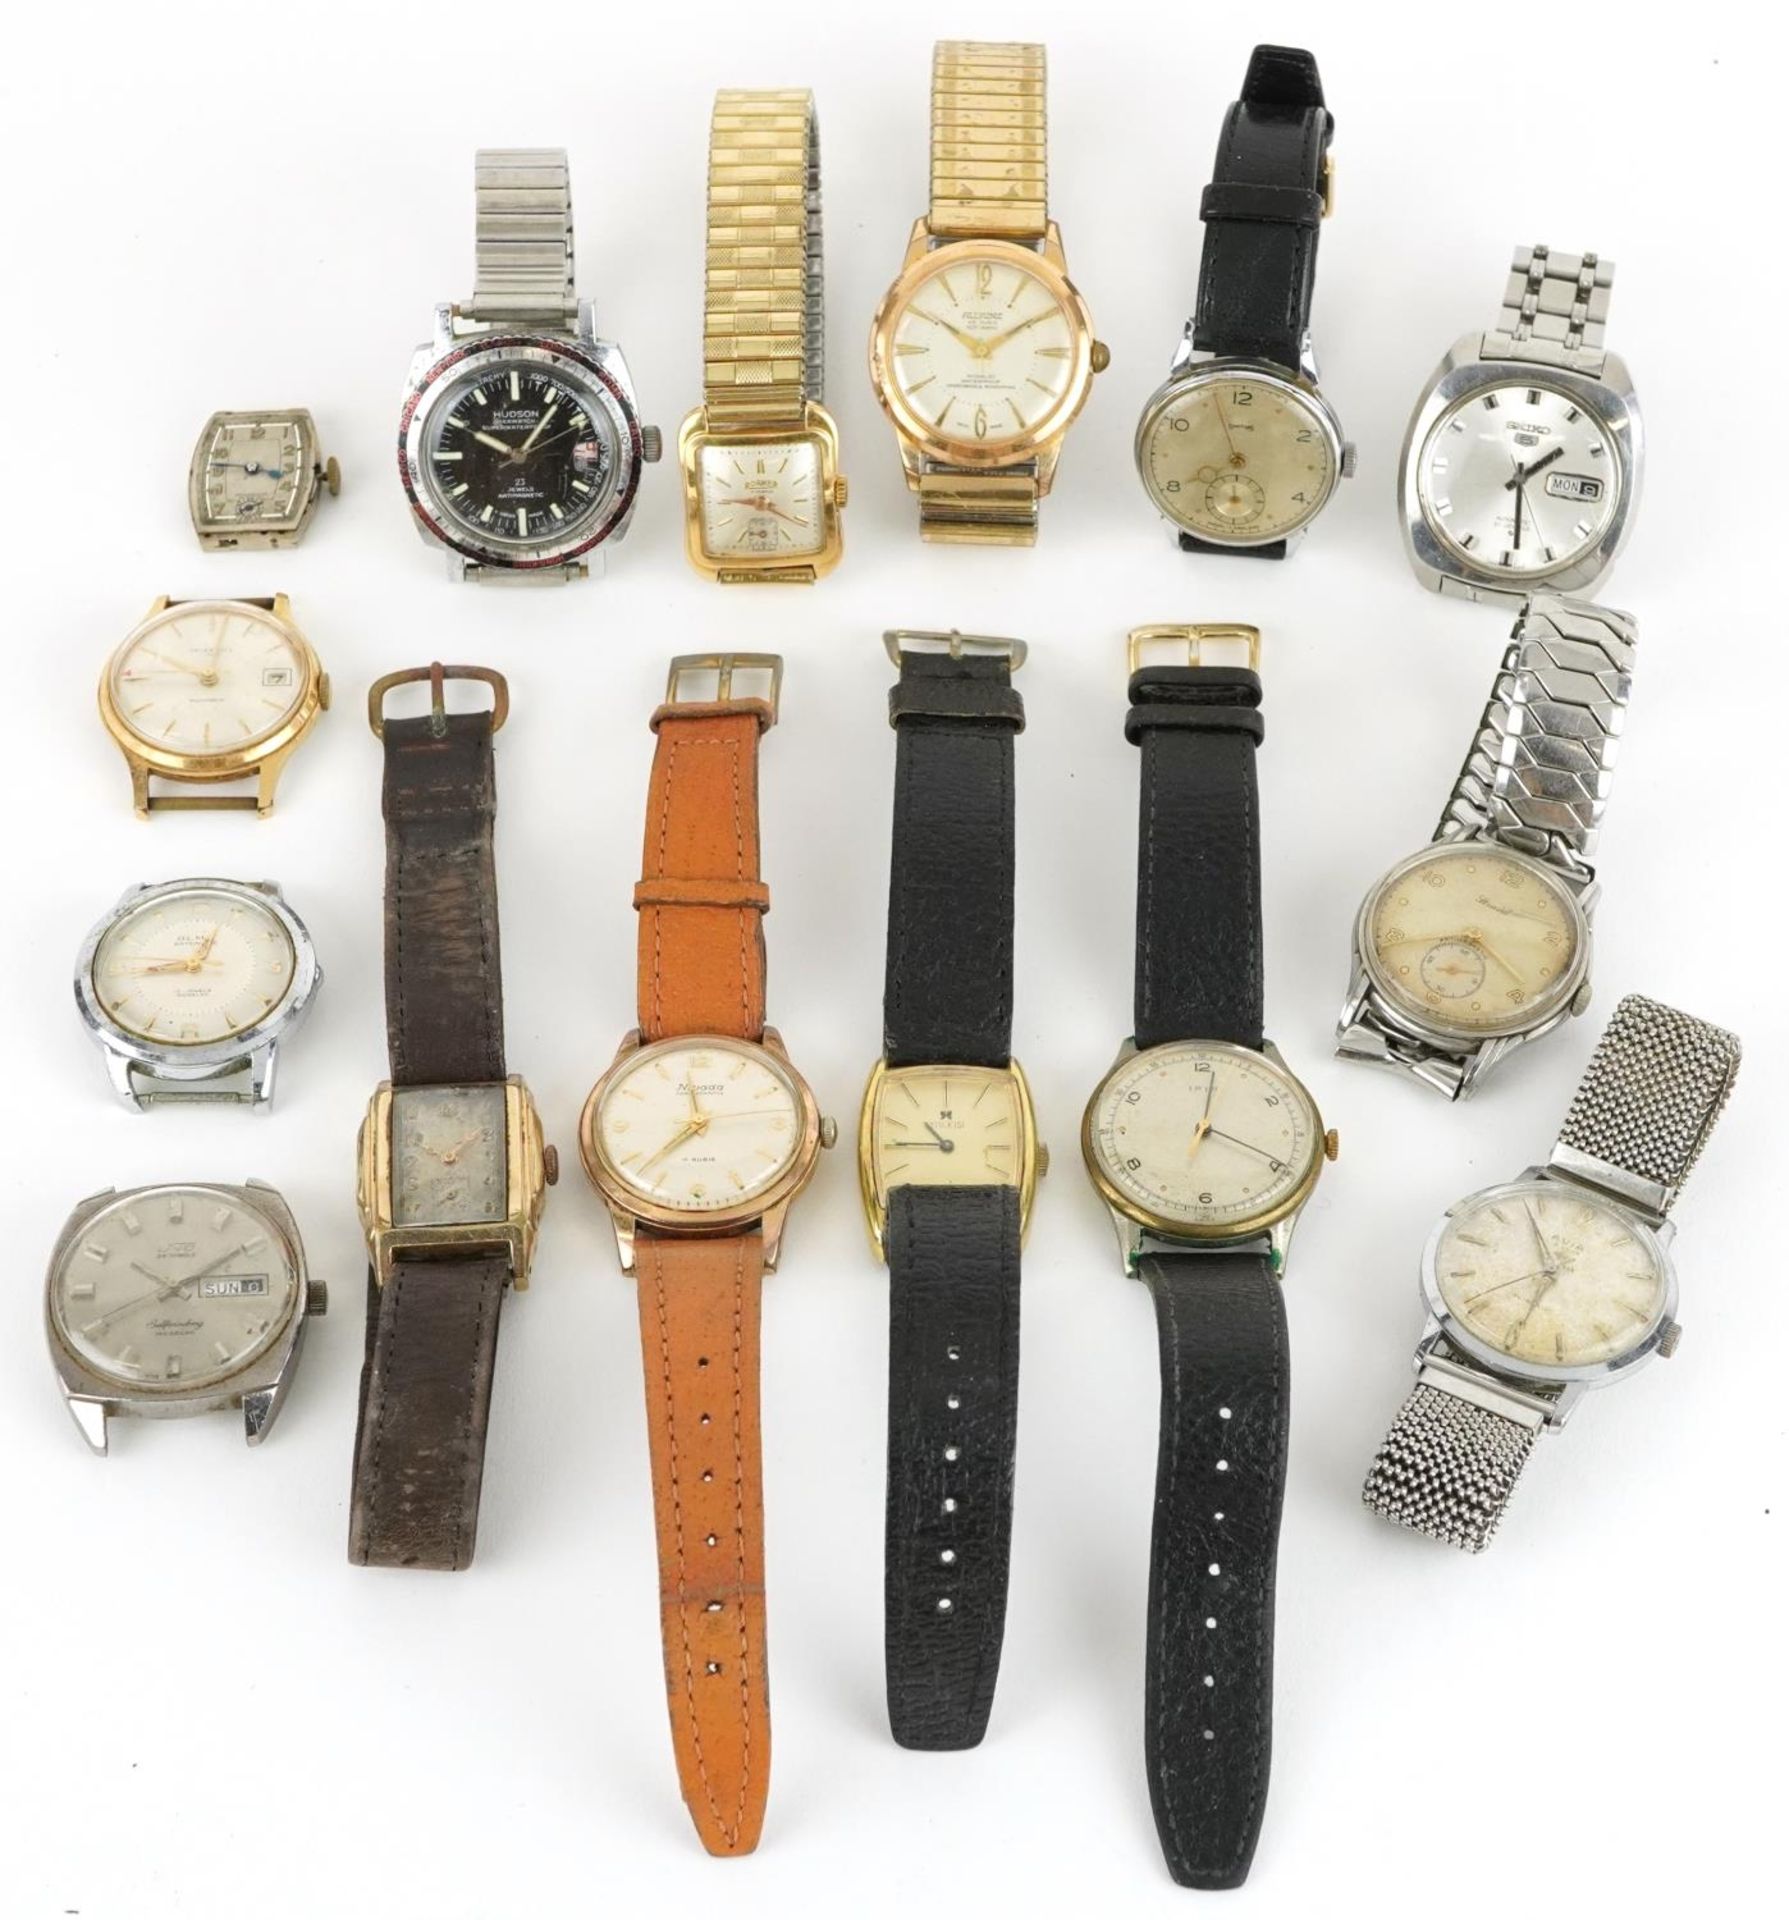 Fourteen vintage gentlemen's wristwatches and a watch movement including Hudson Seawatch, Smiths,